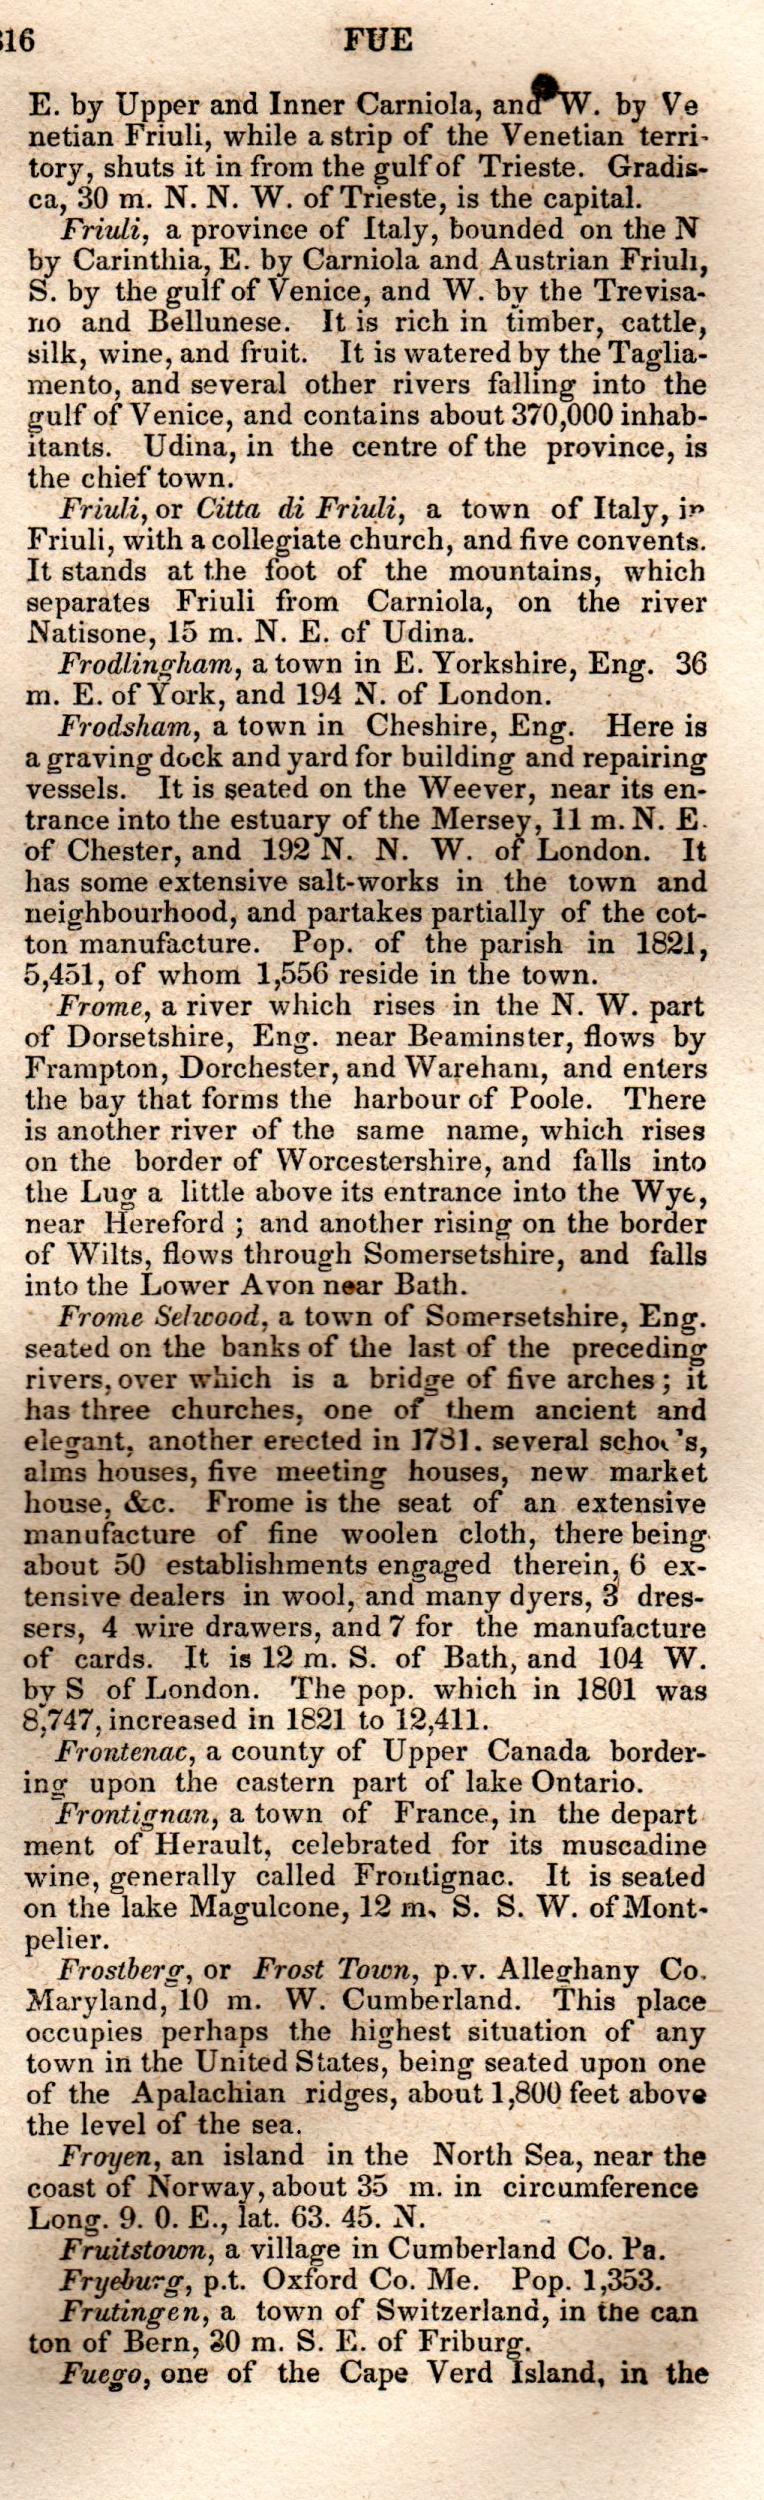 Brookes’ Universal Gazetteer (1850), Page 316 Right Column